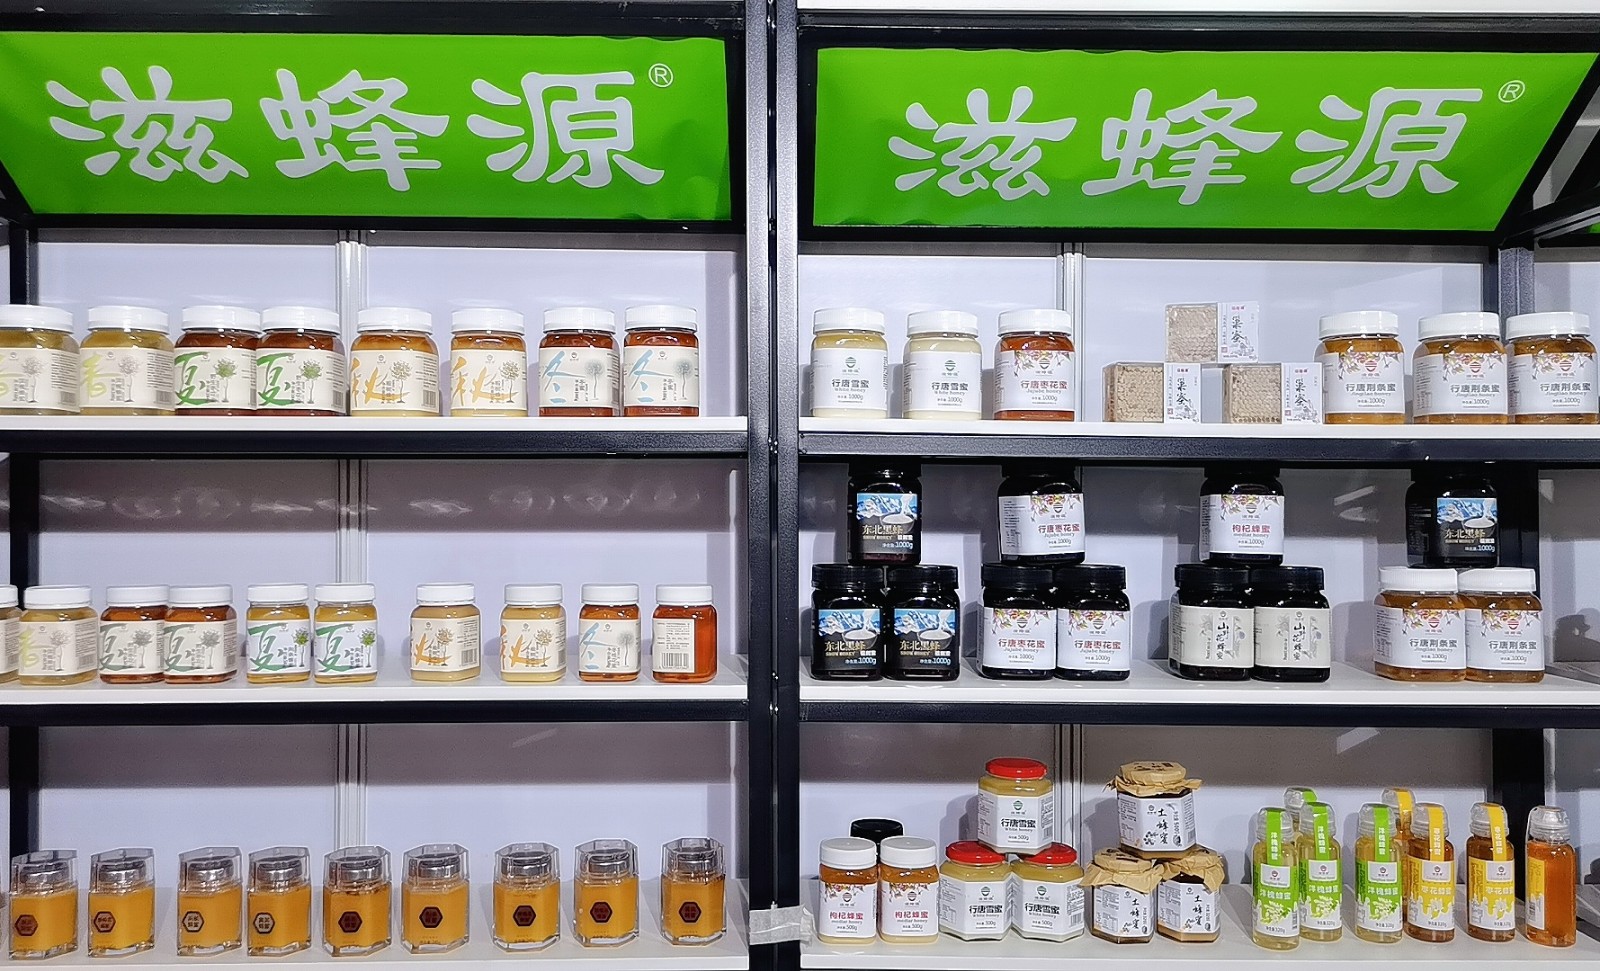 COTV直播-河北滋蜂源蜂业有限公司专业生产销售“滋蜂源”品牌系列各种营养健康蜂蜜产品，欢迎大家光临！